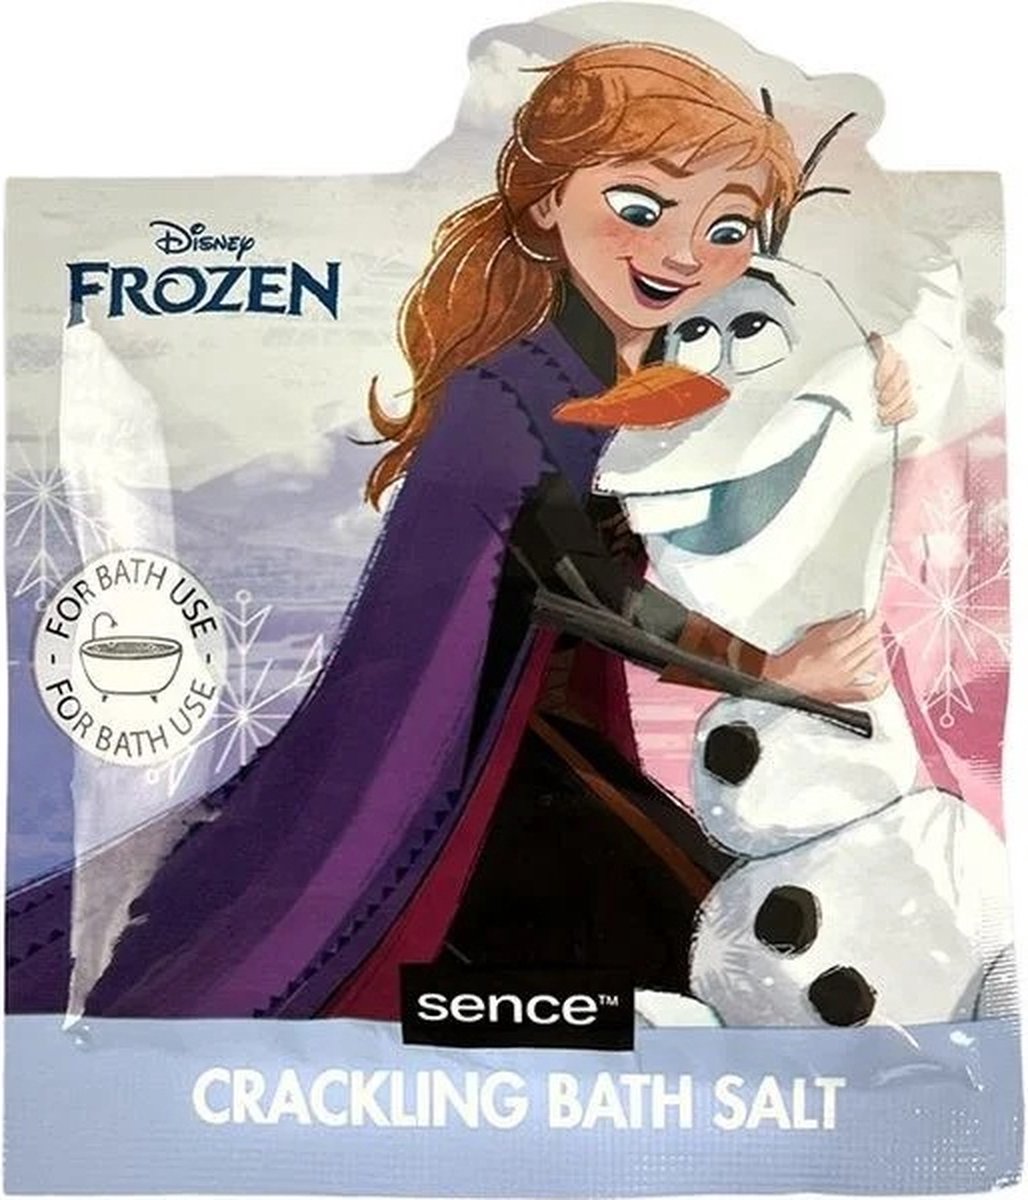 Disney Frozen olaf badzout - Sence - crackling bath salt - 55 gram